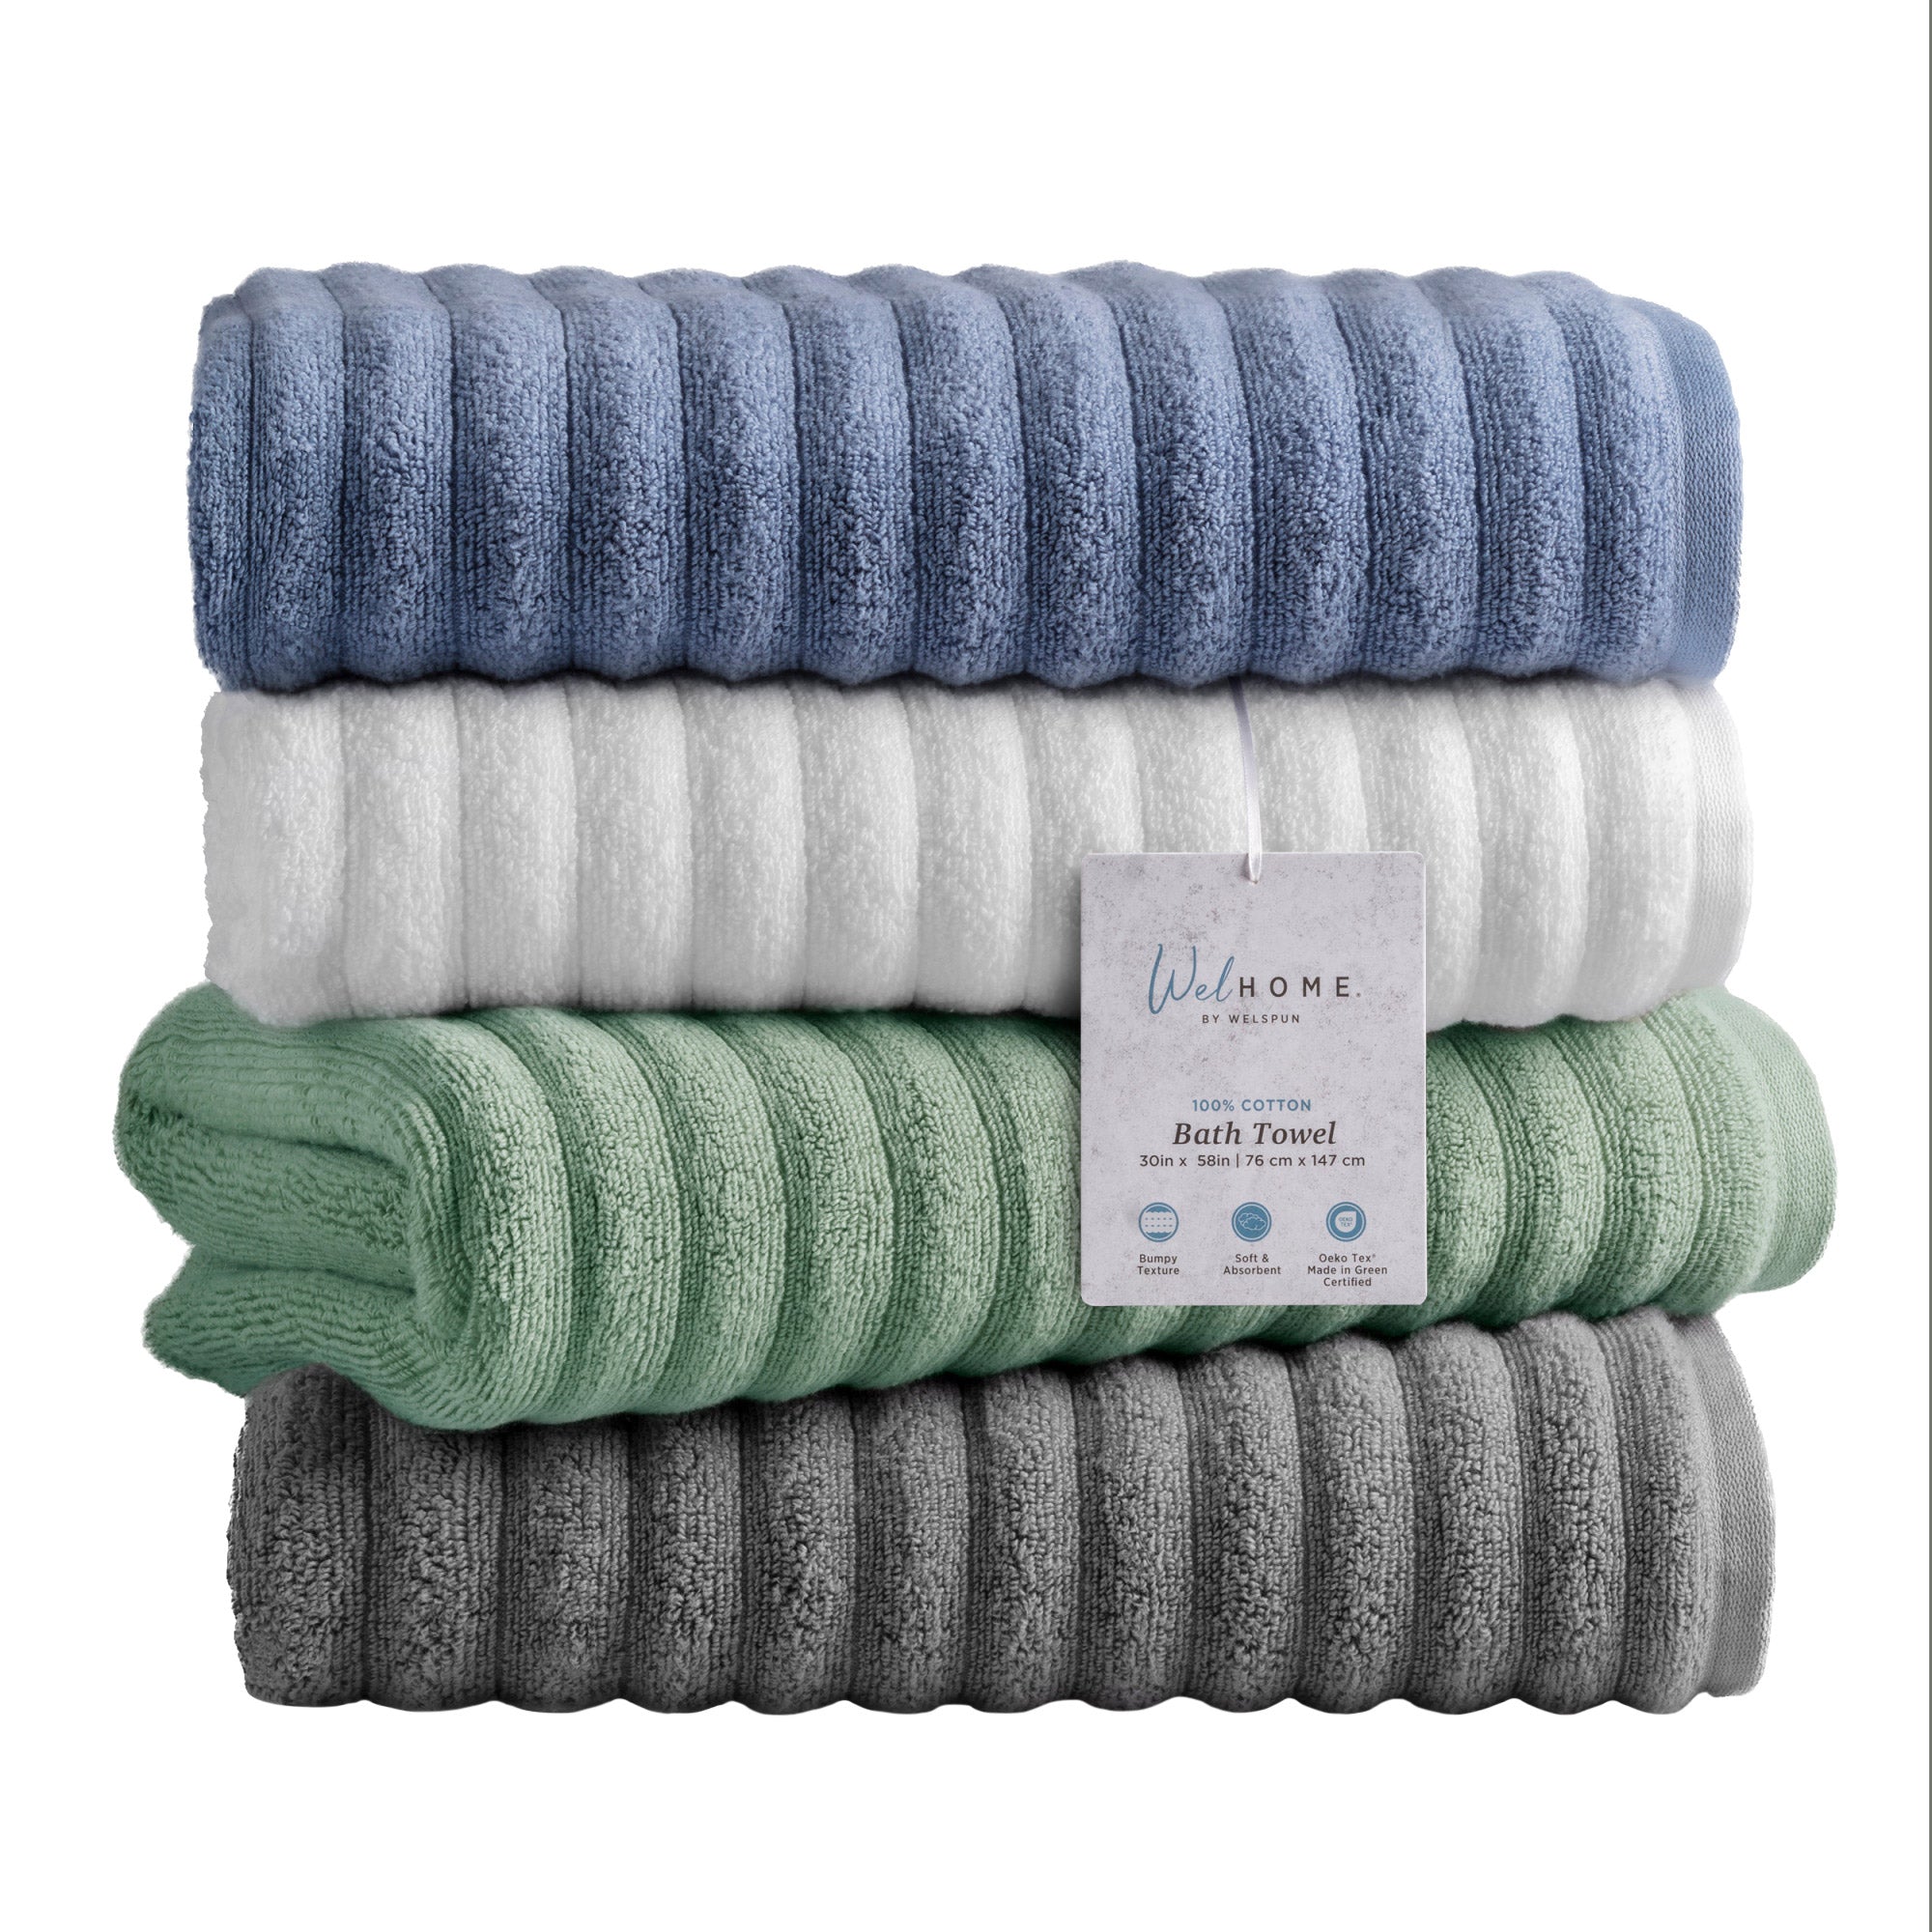 Welhome 100% Cotton Bumpy Textured Bath Towel 2-Piece Set – RJP Unlimited